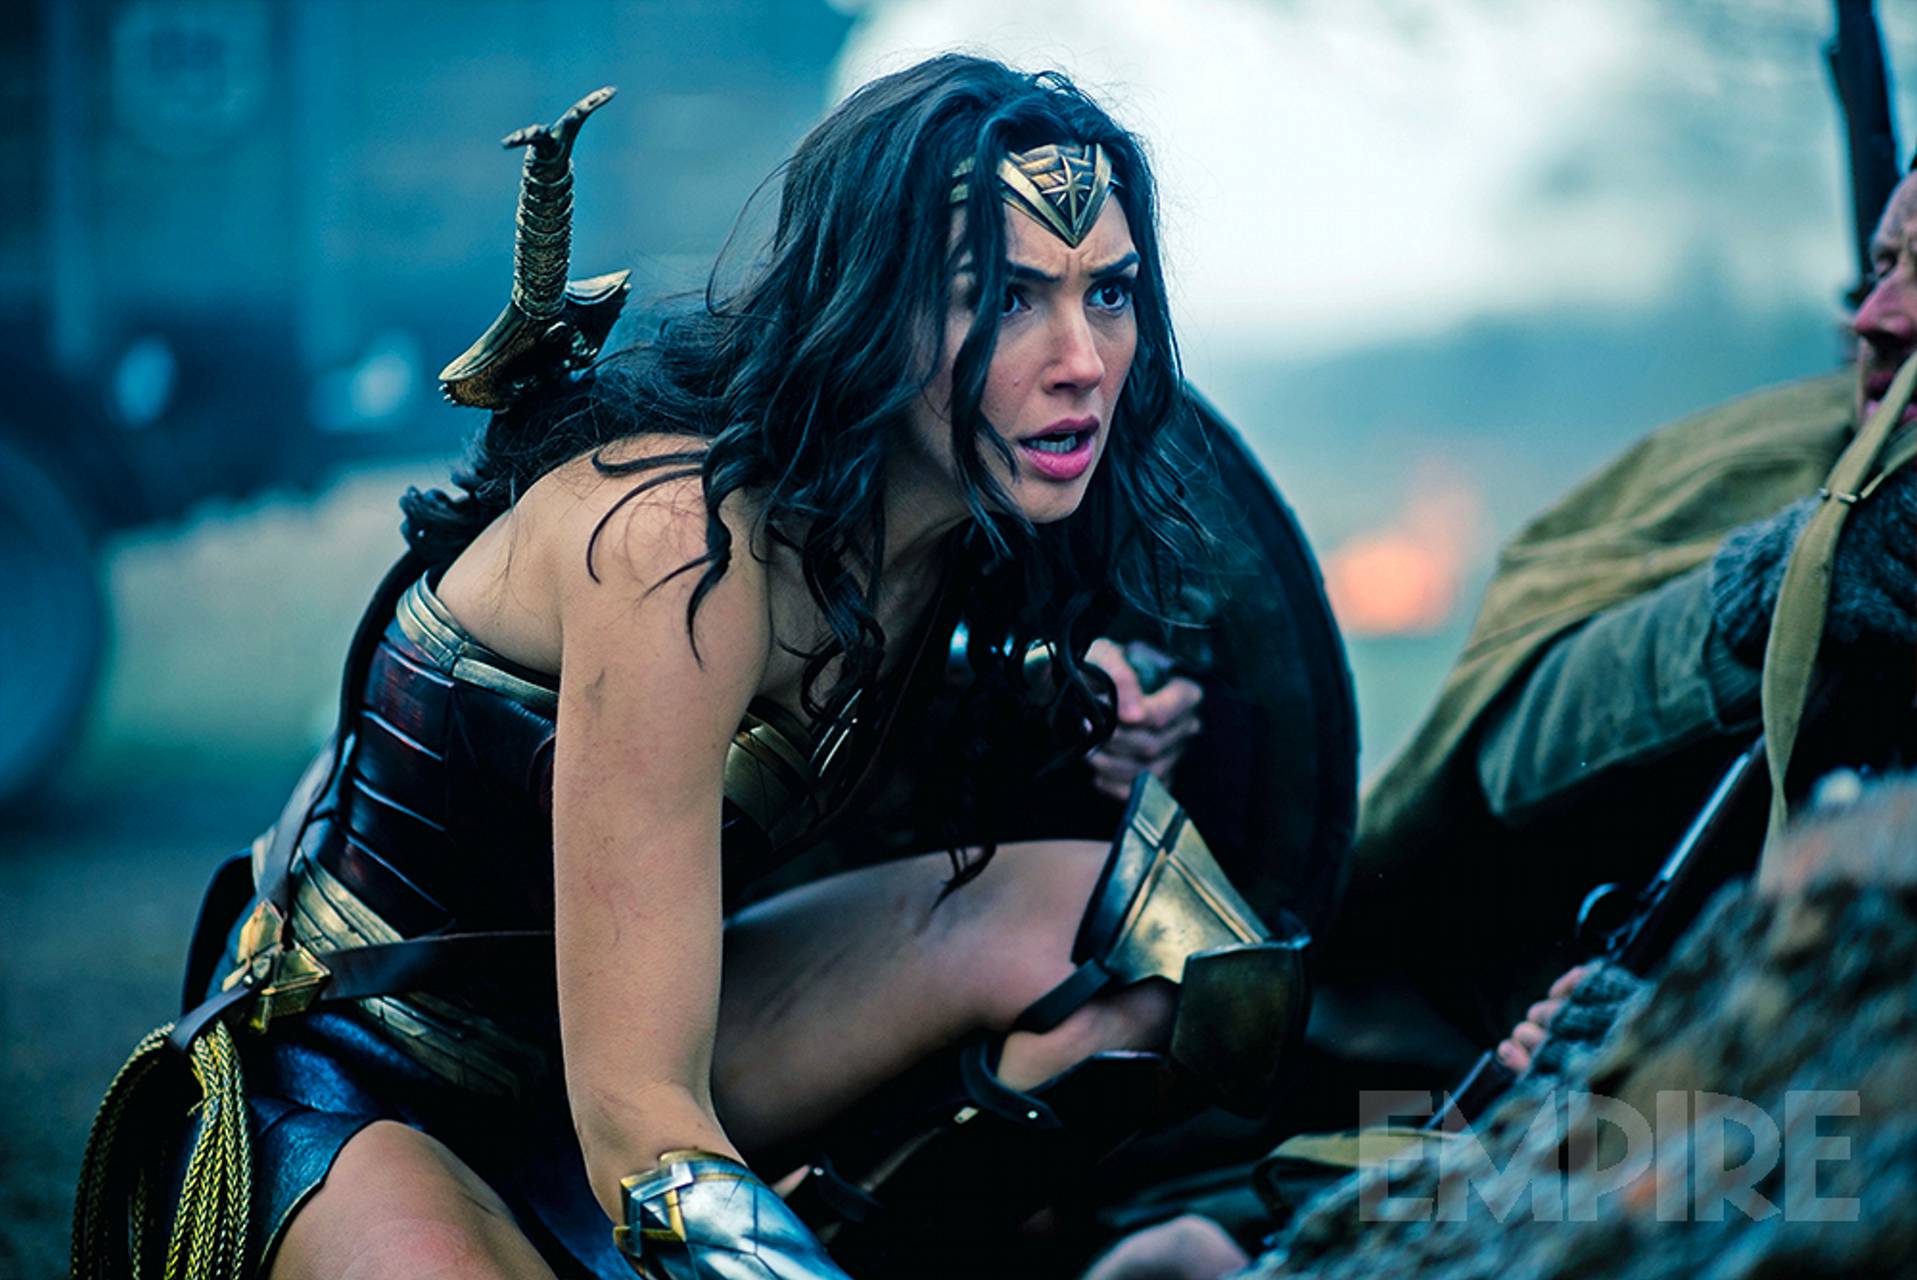 Wonder Woman, played by Gal Gadot, crouching on a battlefield